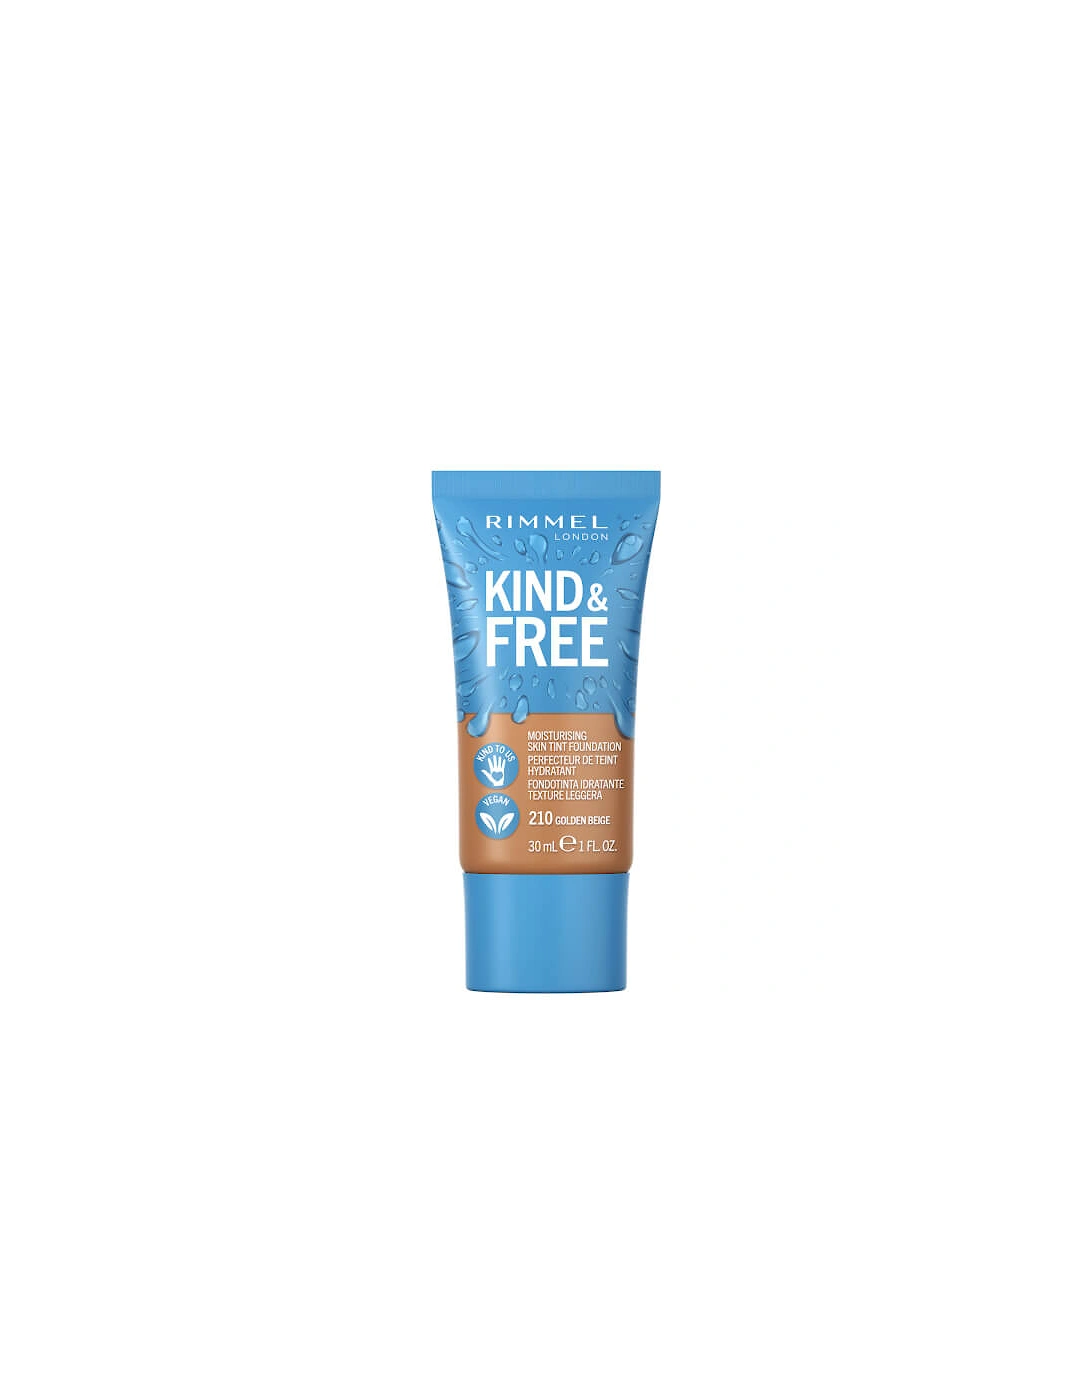 Kind and Free Skin Tint Moisturising Foundation - Golden Beige, 13 of 12